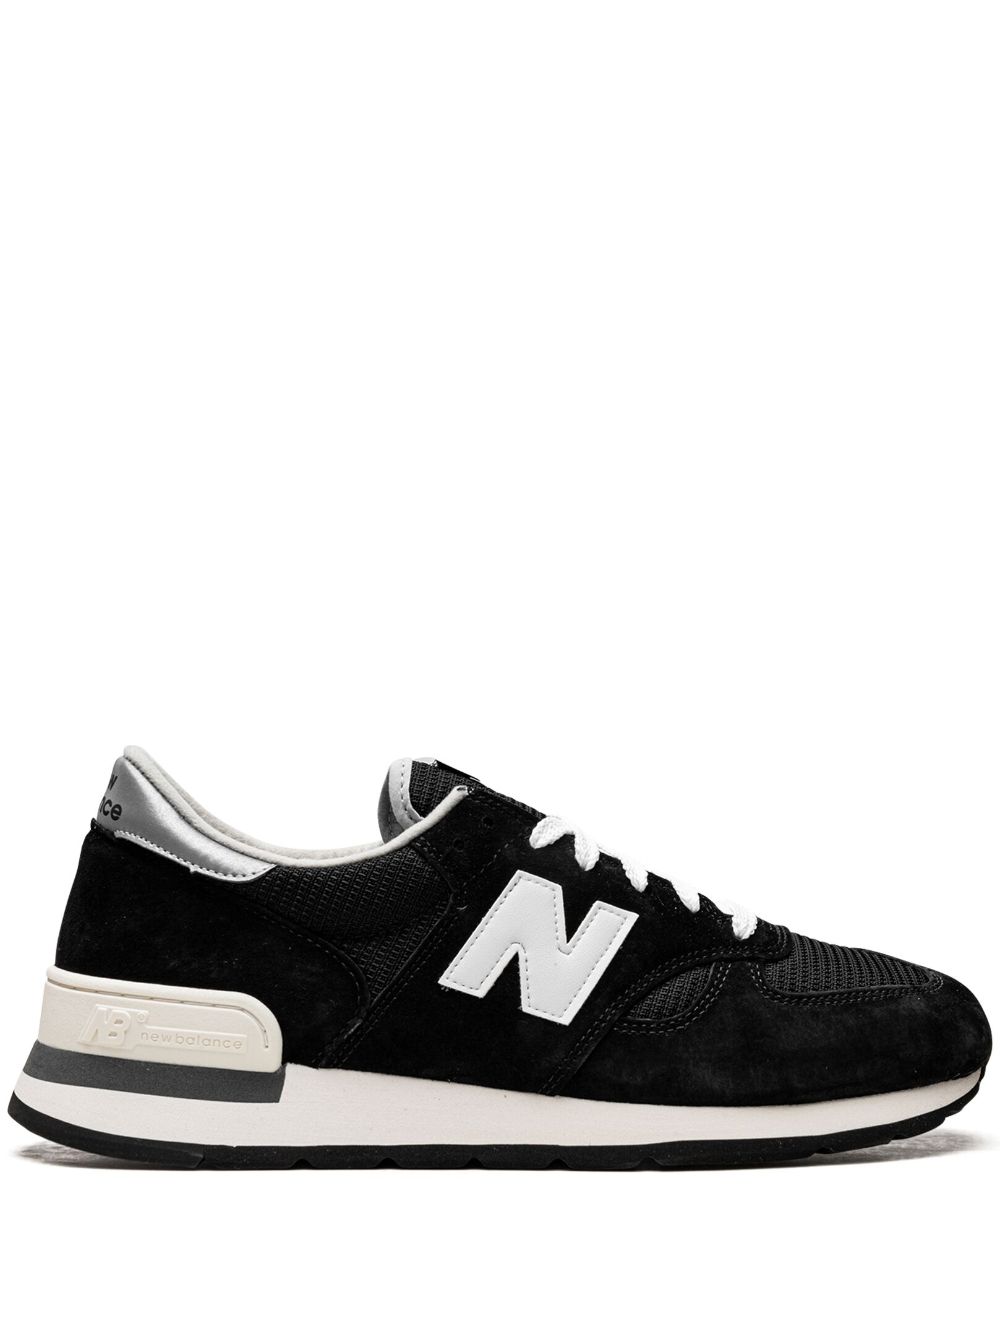 New Balance 990 "Black/White" sneakers von New Balance